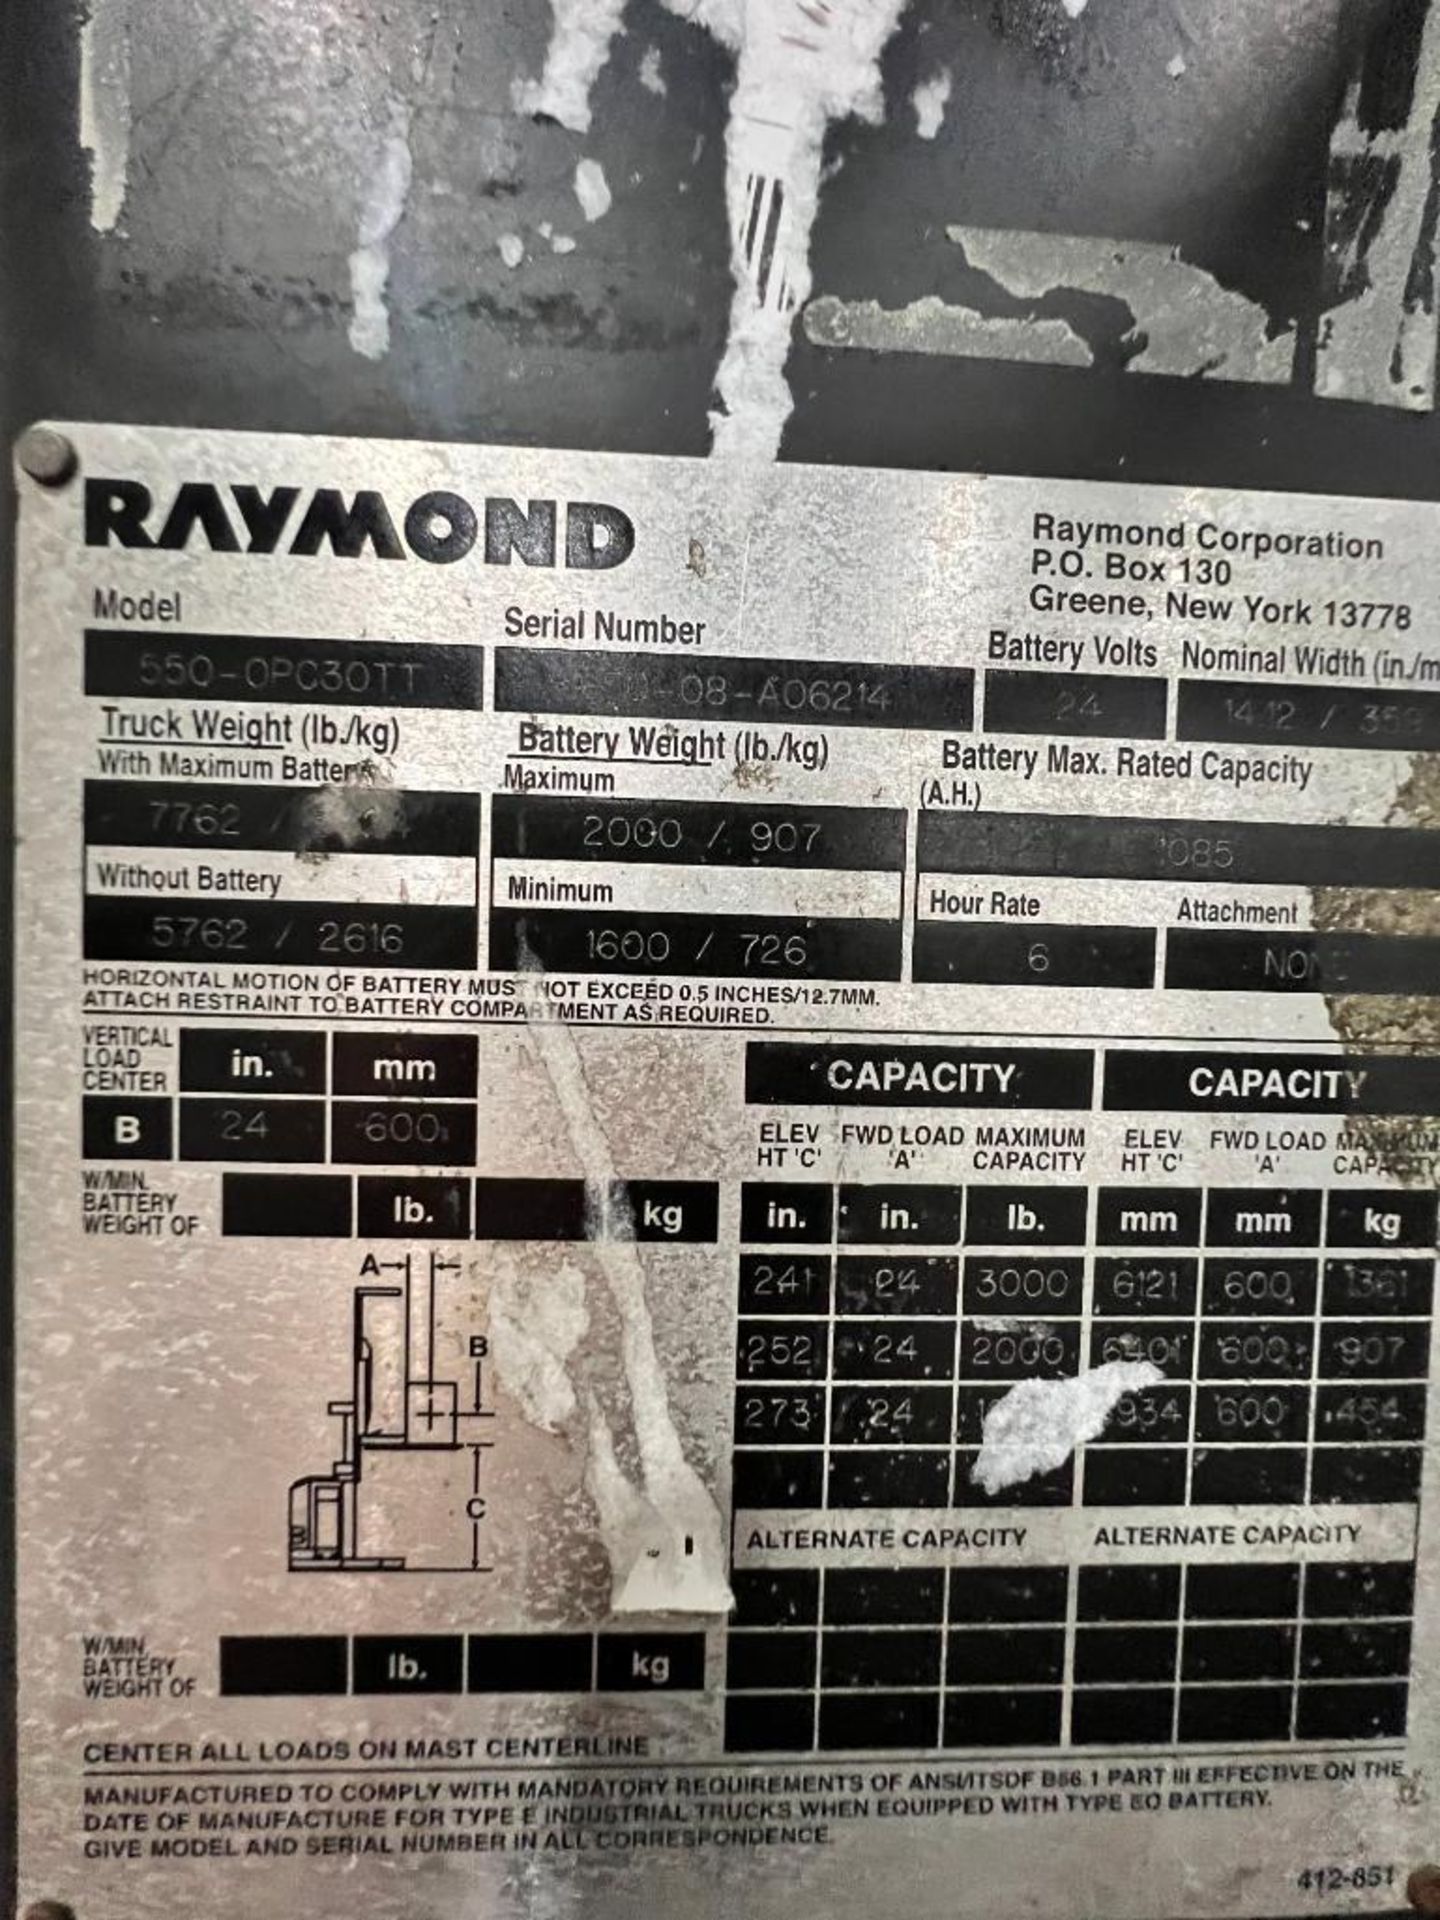 Raymond 3,000 LB. Order Picker, Model 550-OPC30TT, S/N 550-08-A0624, HD Hours 10,473 ***Buyer is Res - Image 5 of 6